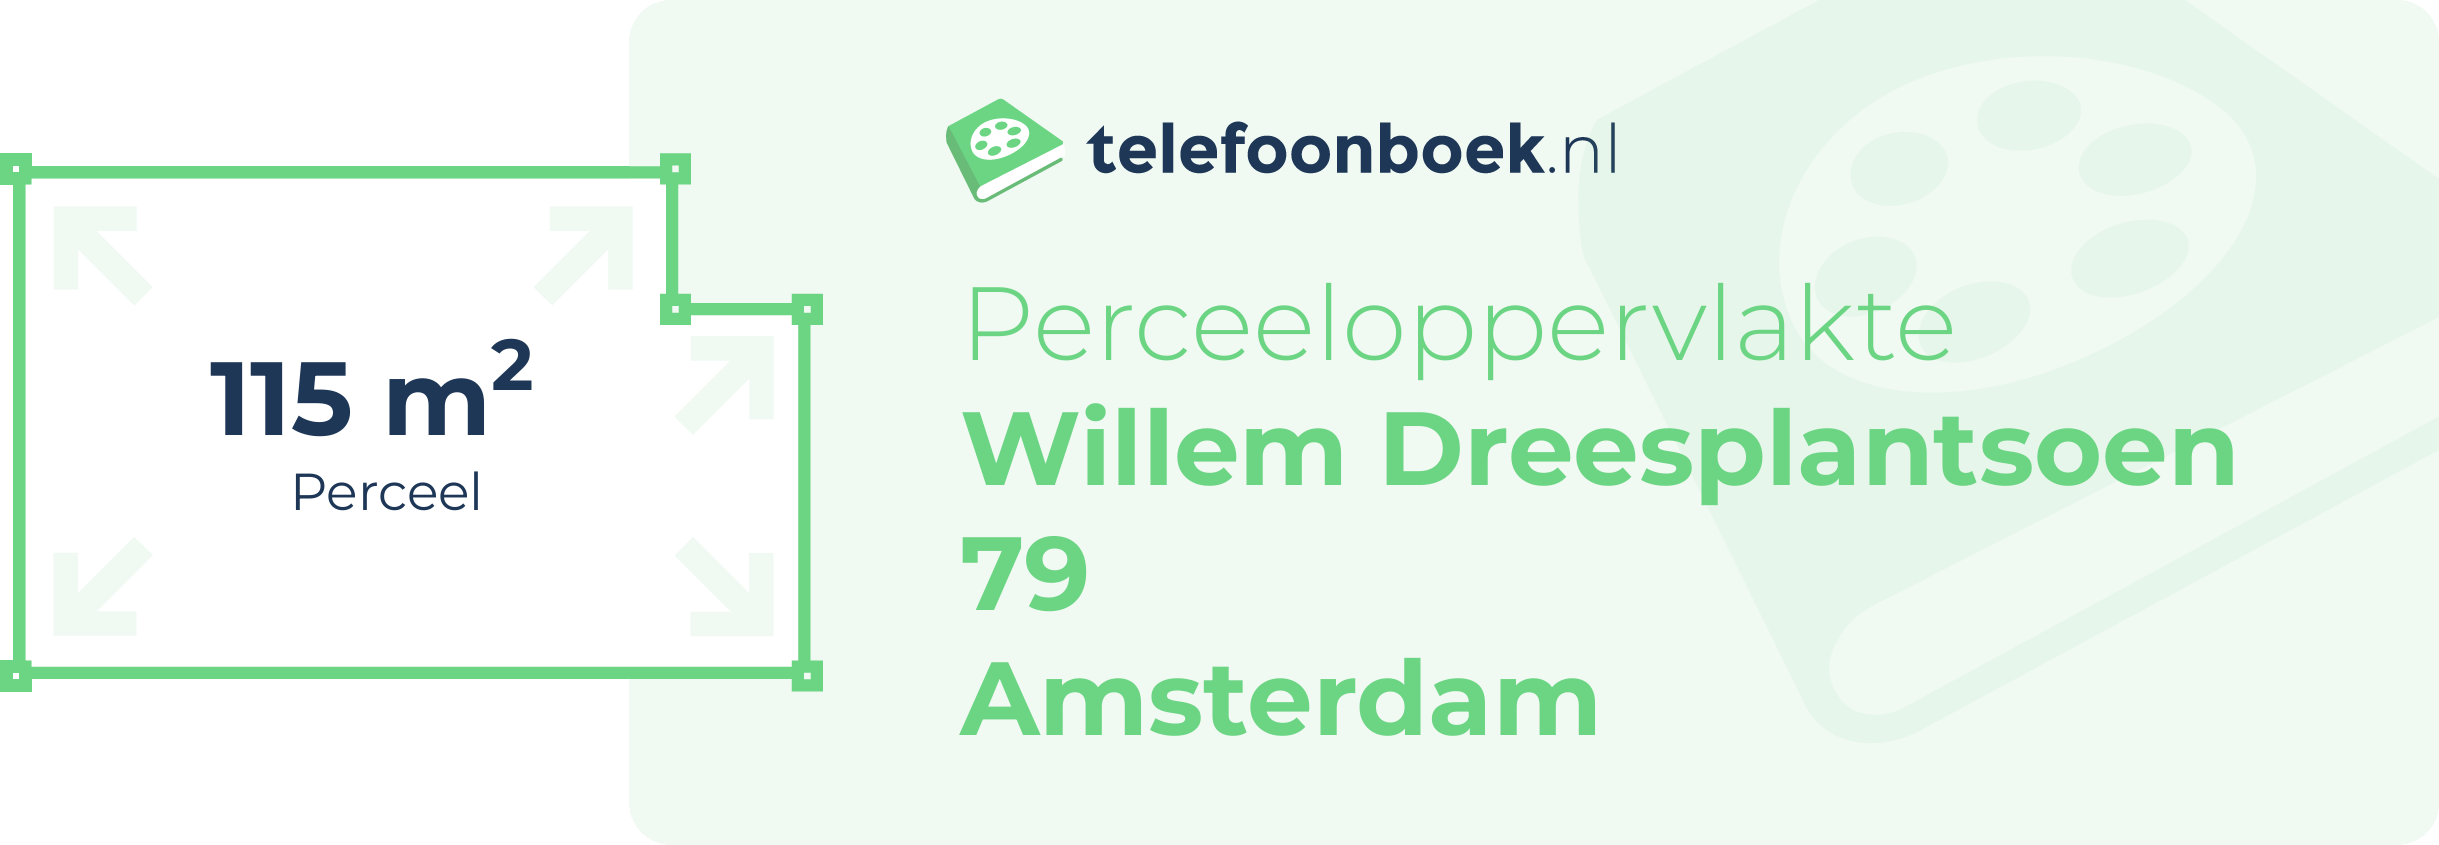 Perceeloppervlakte Willem Dreesplantsoen 79 Amsterdam